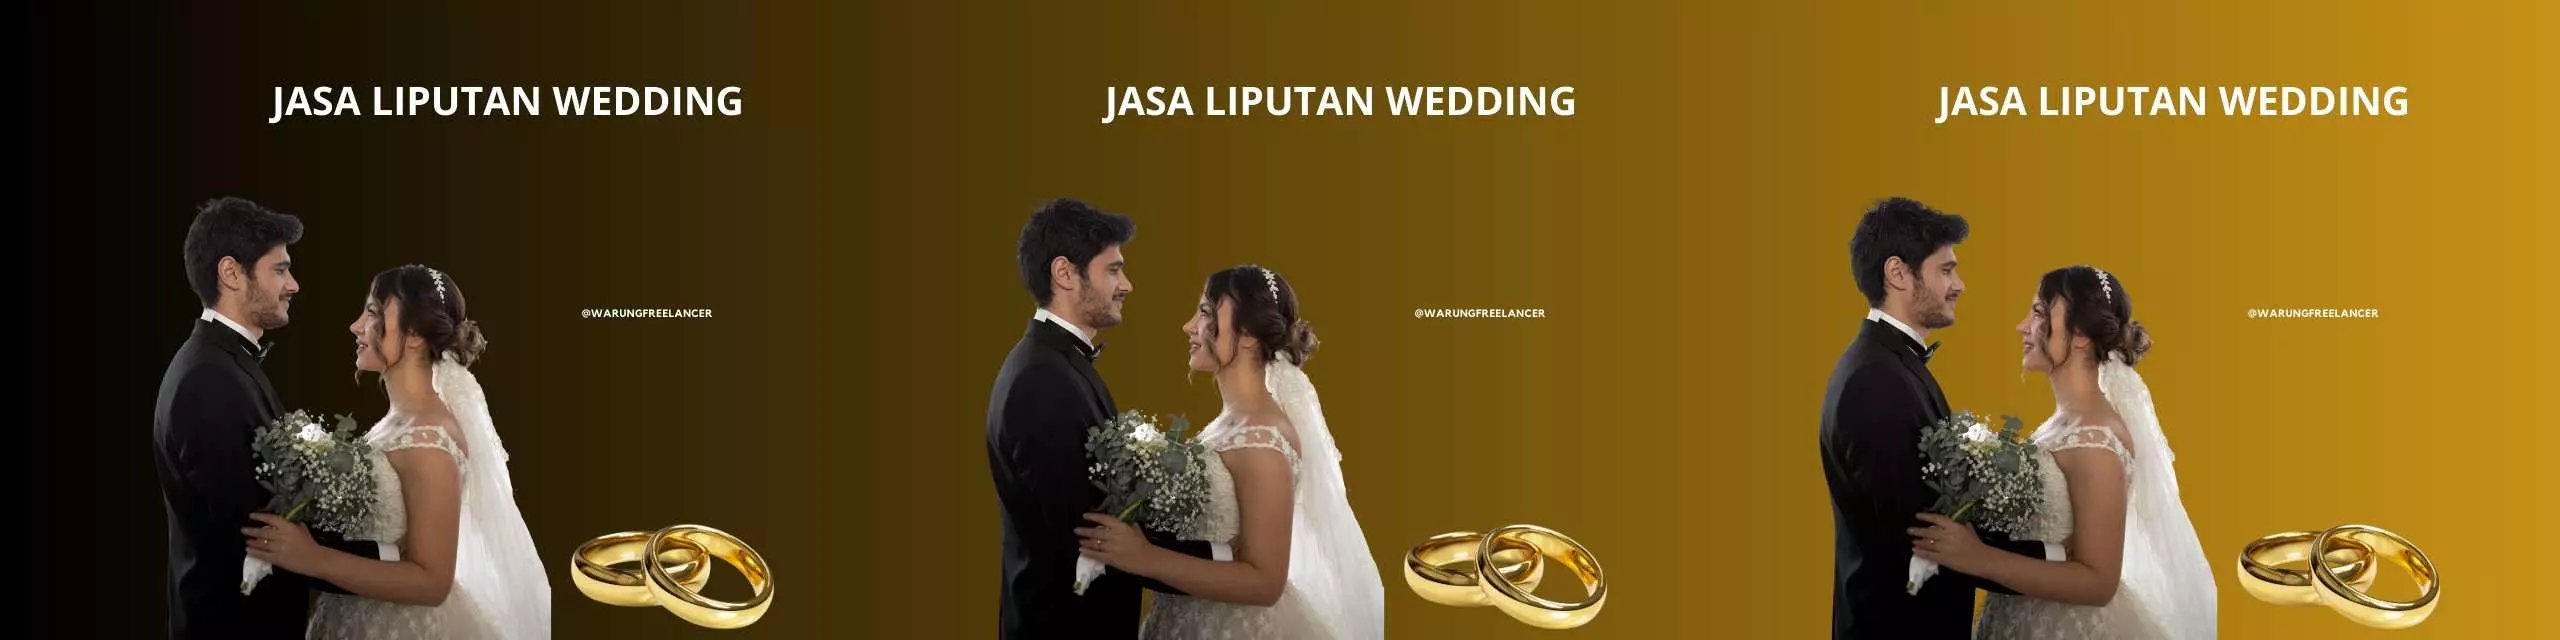 Jasa Liputan Wedding